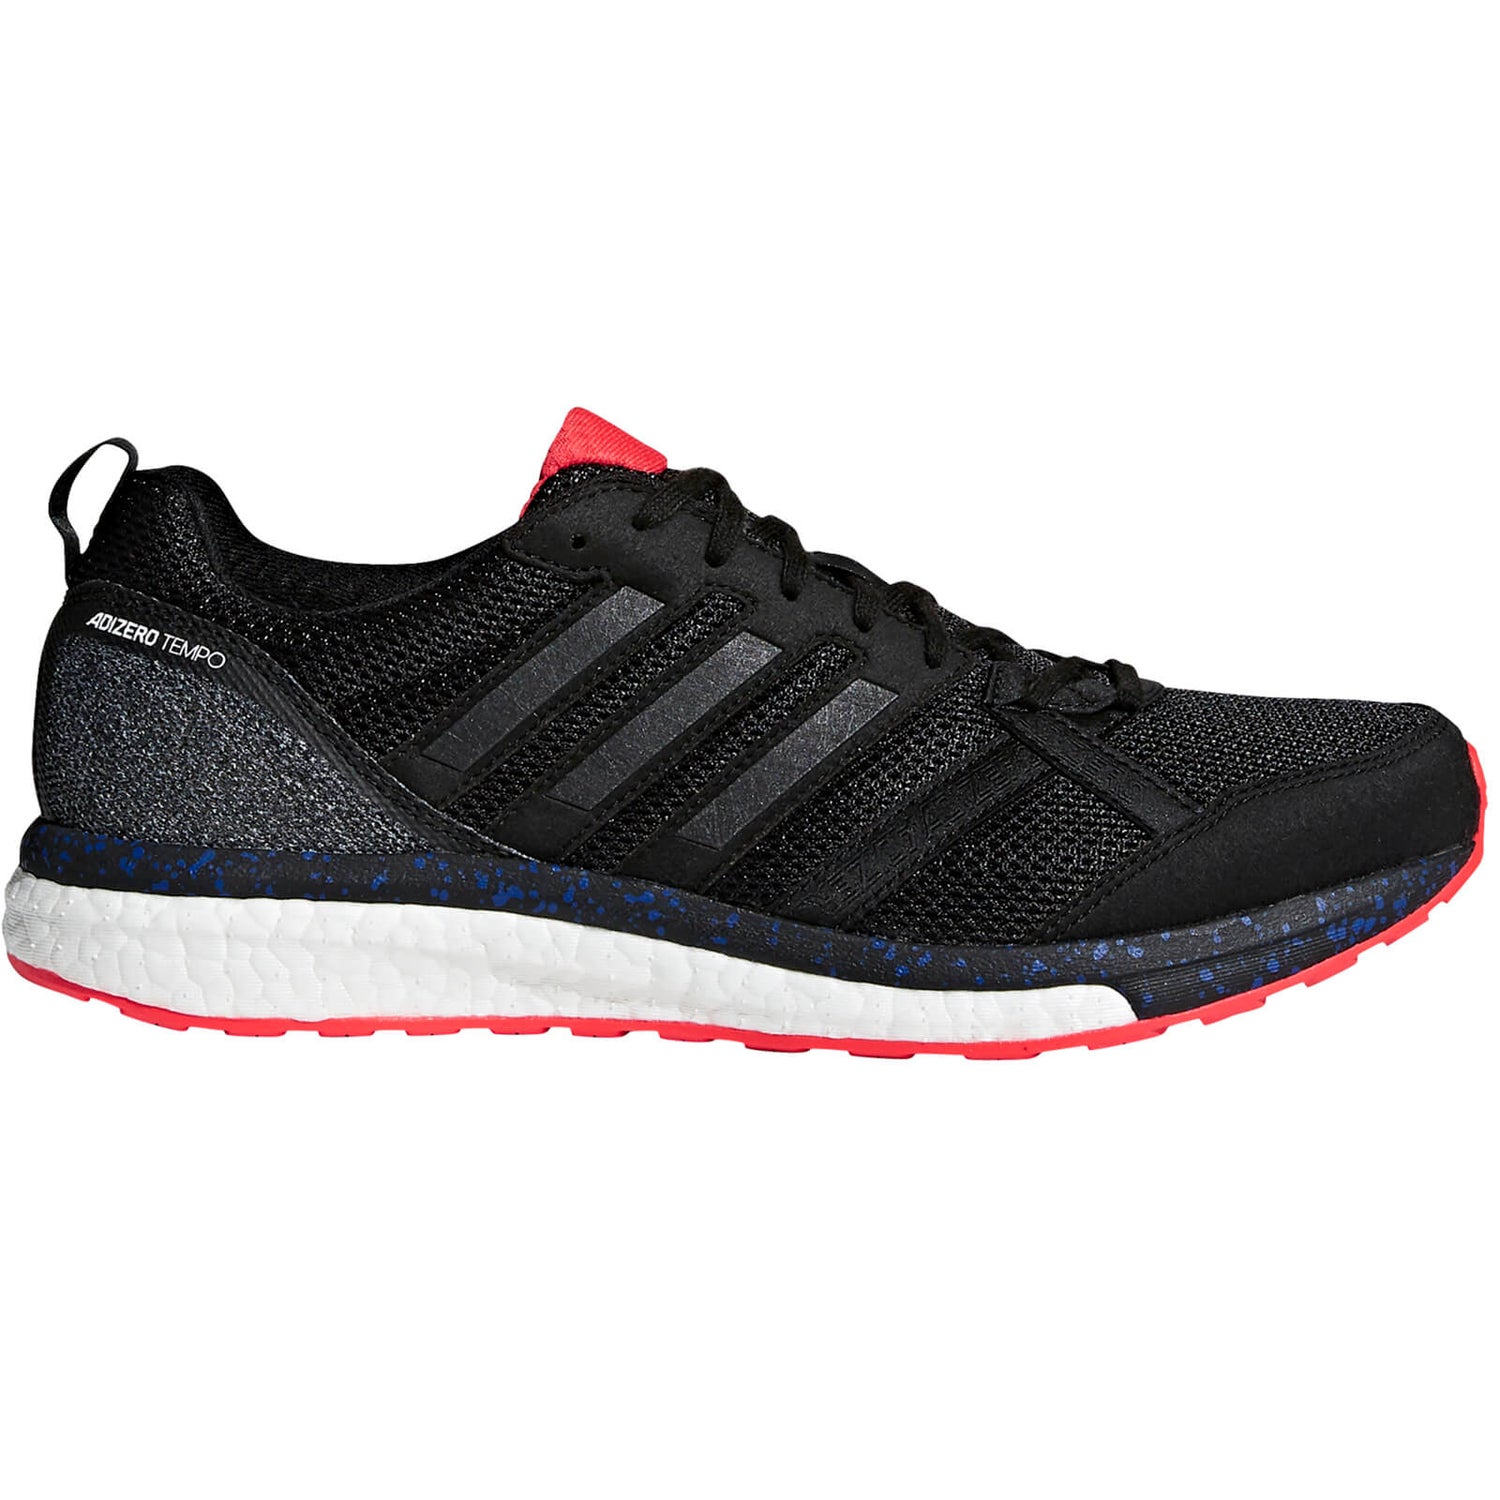 adidas Adizero Tempo 9 Aktiv Running Shoes - Black/Red |